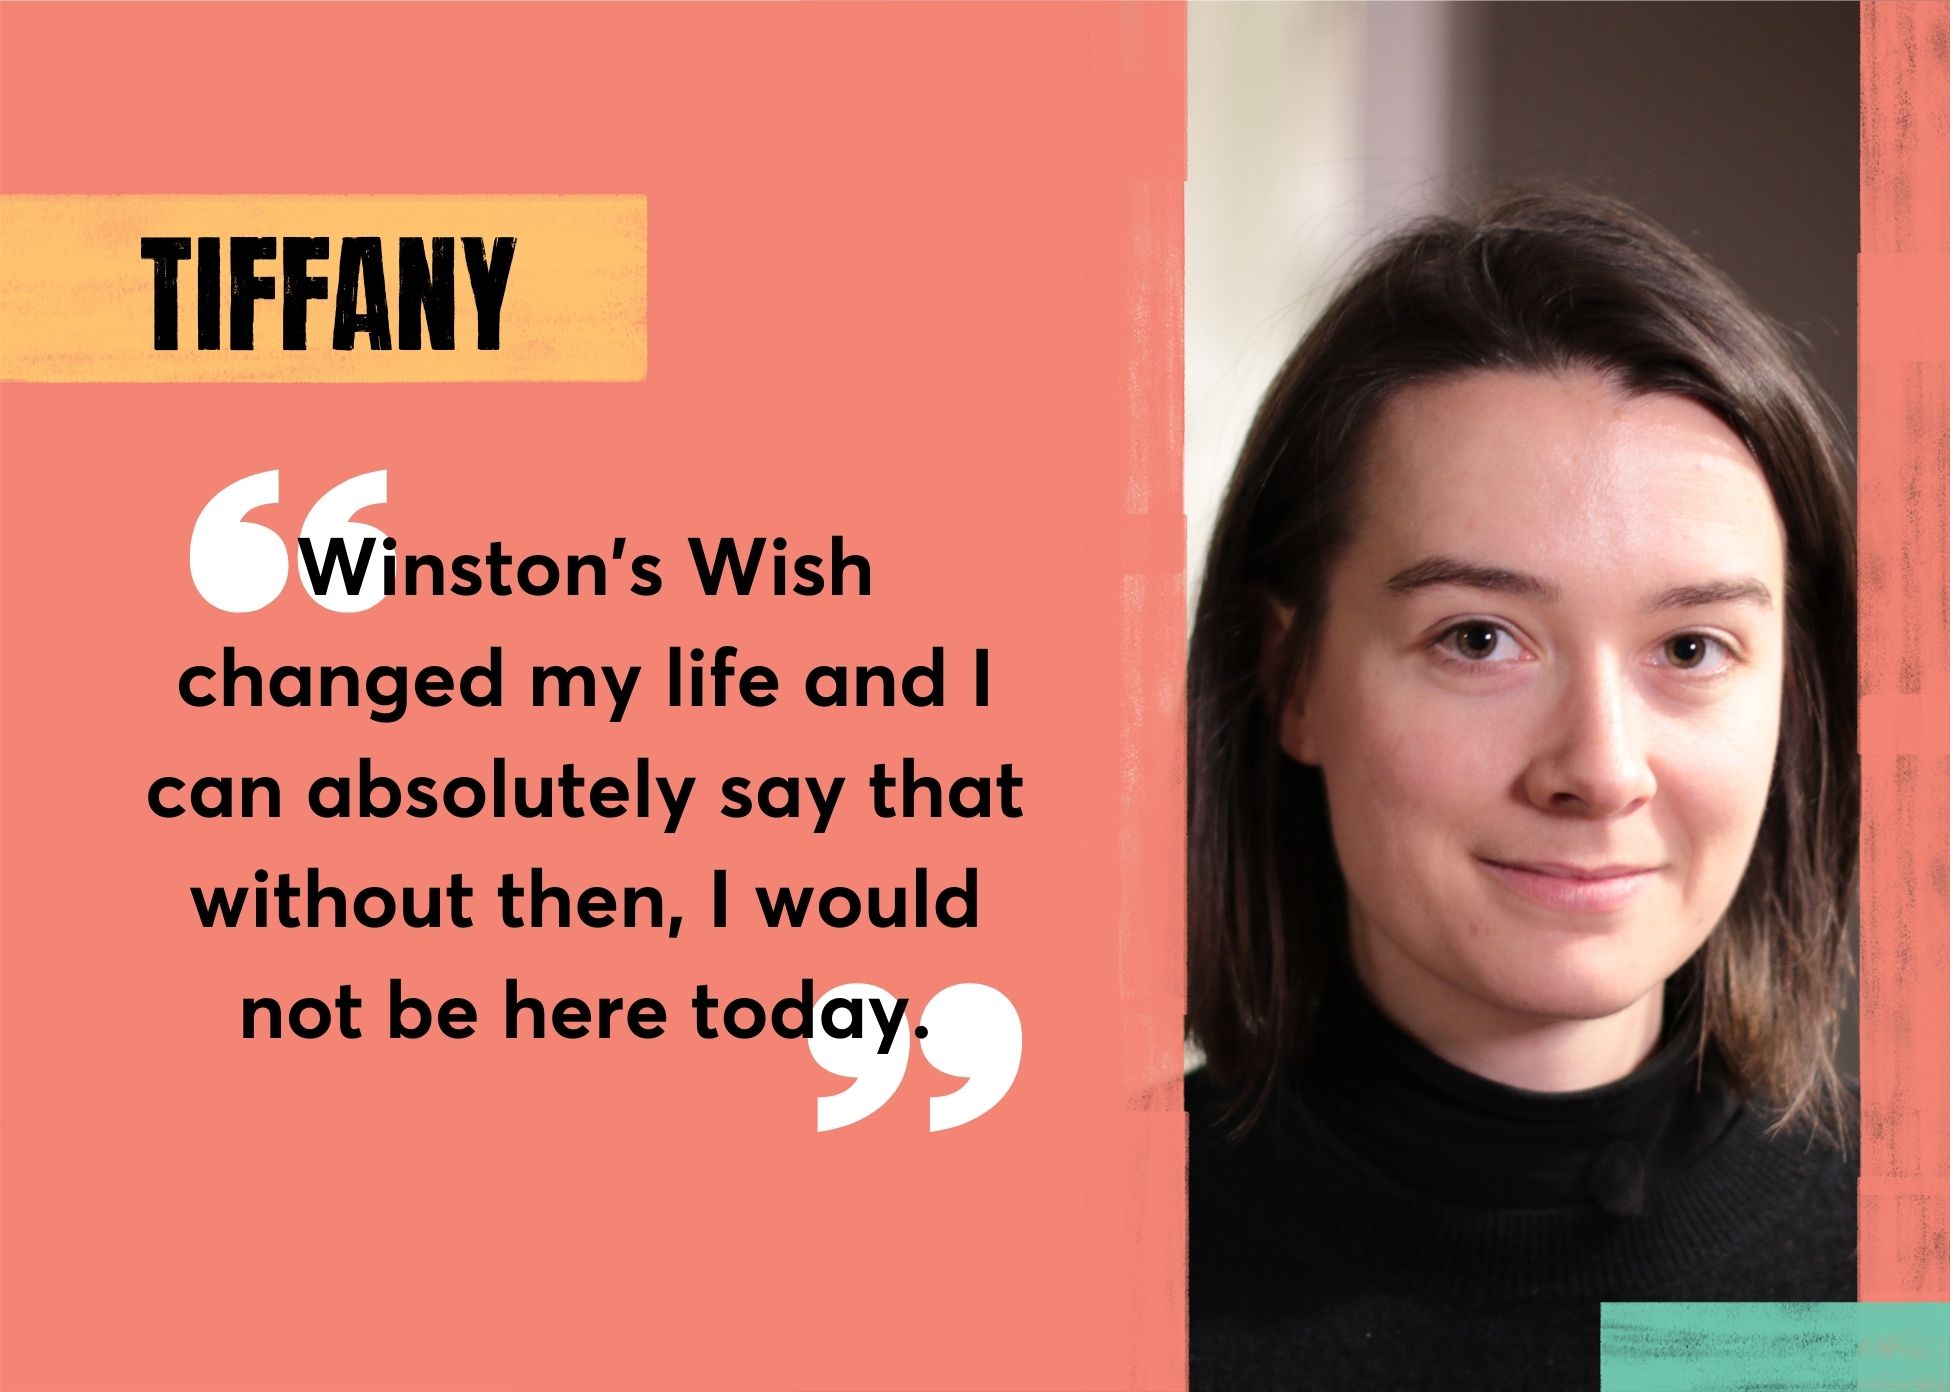 BBC Lifeline Appeal for Winston's Wish - Tiffany's quote